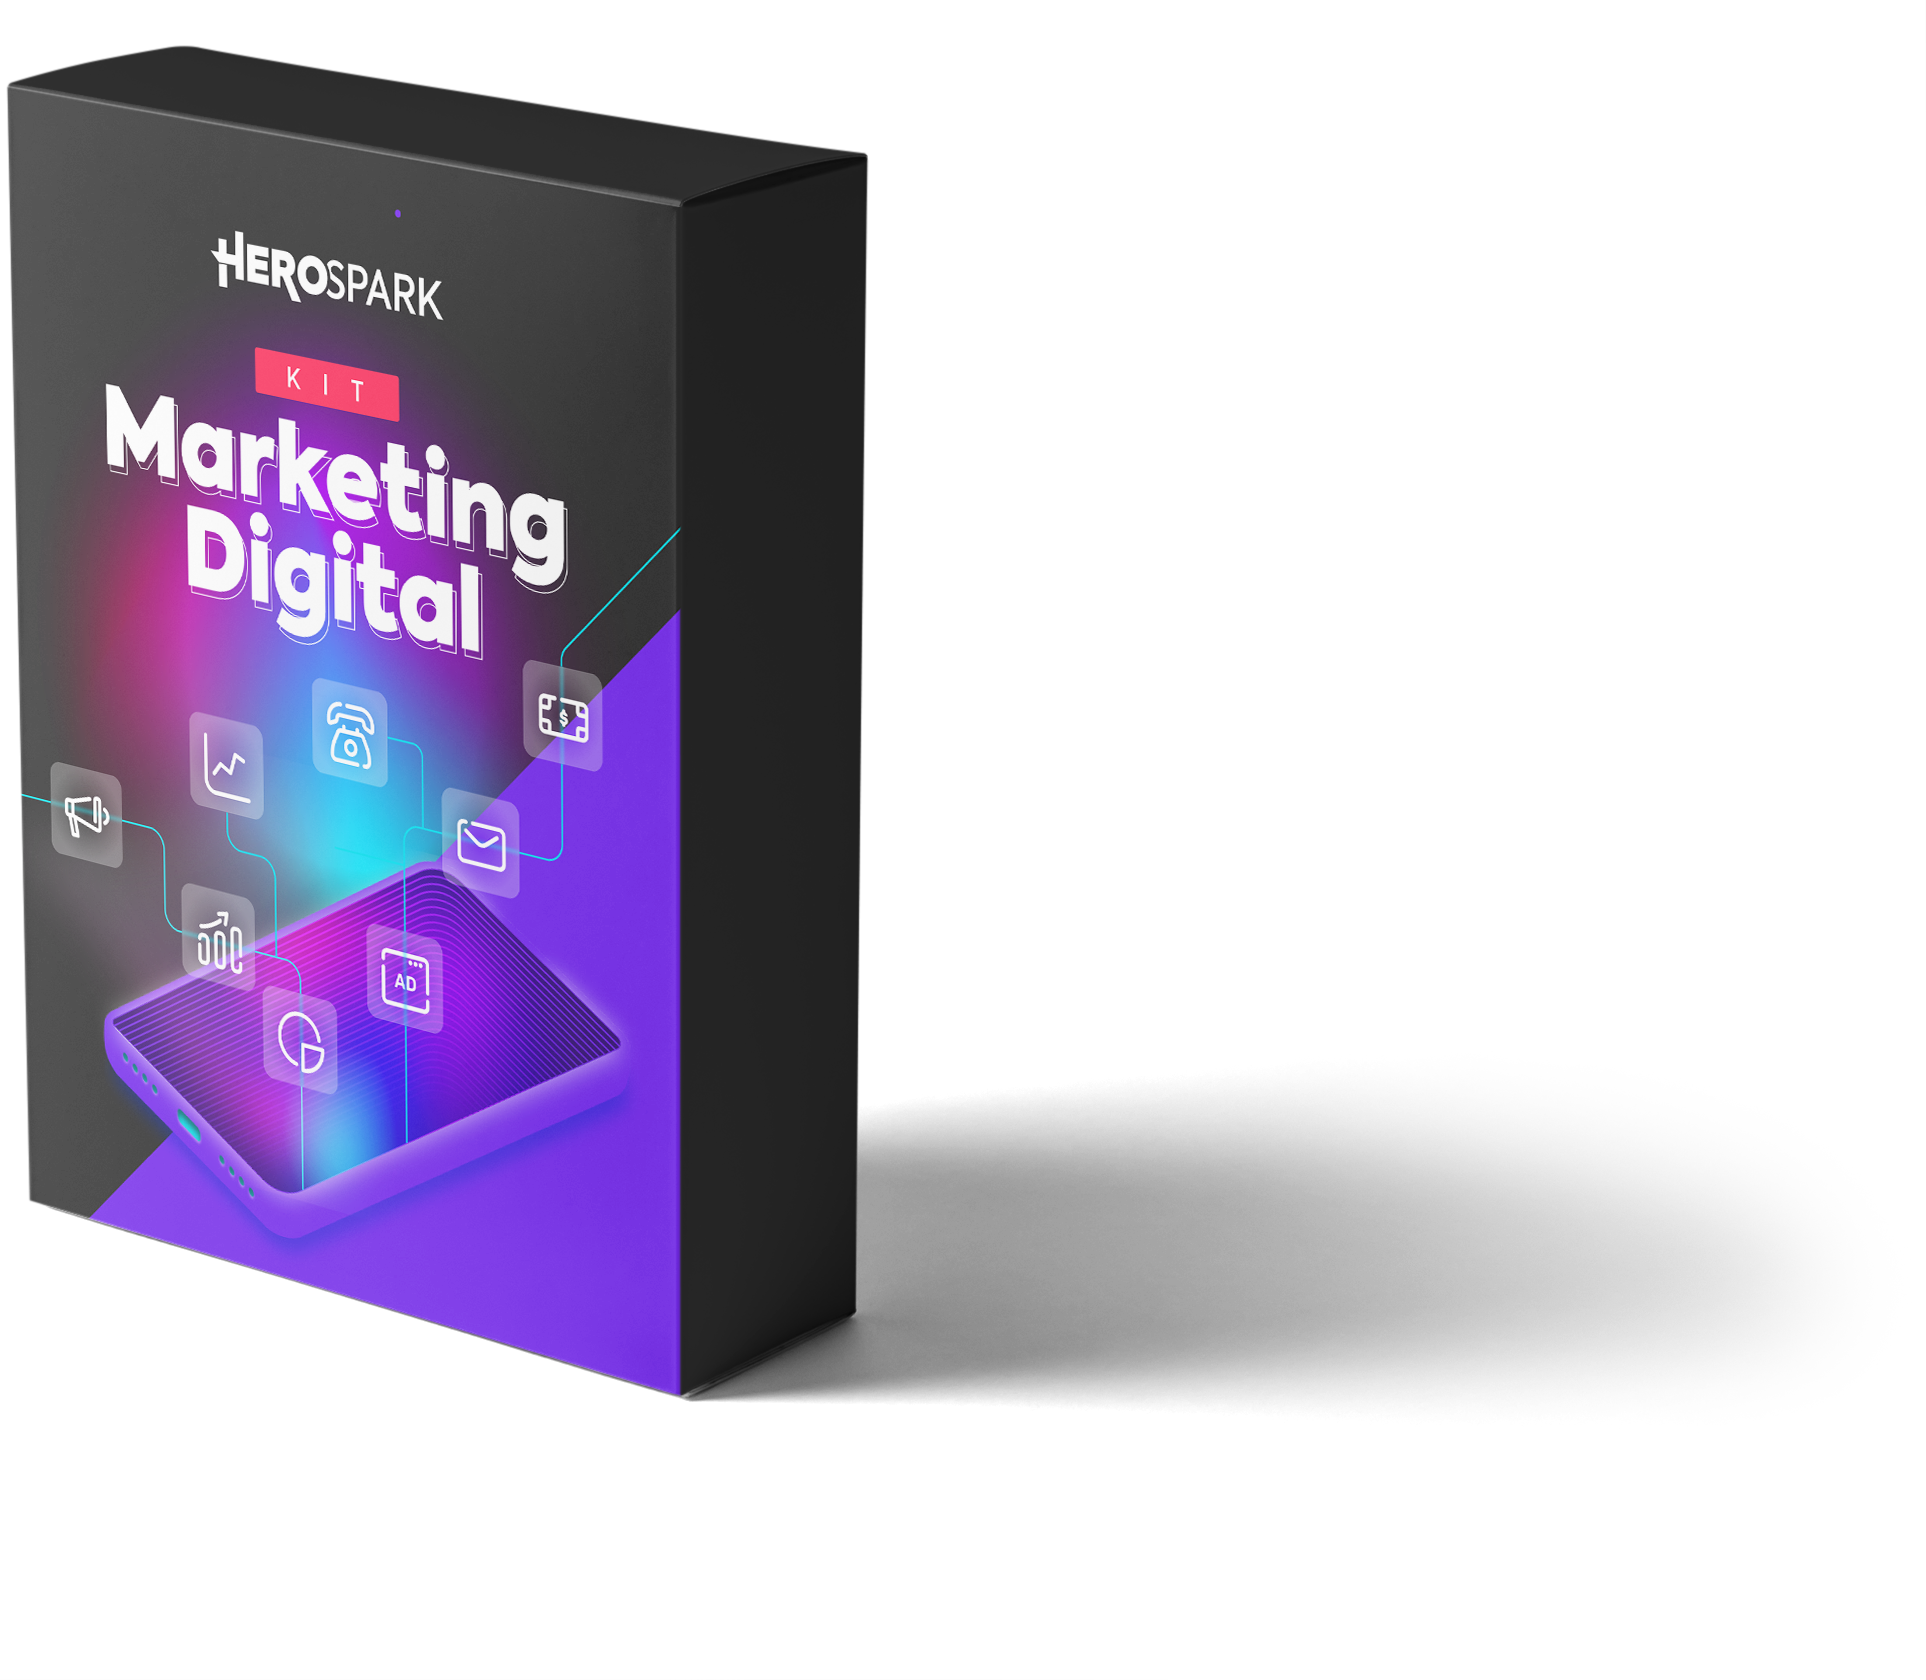 kit marketing digital mockup